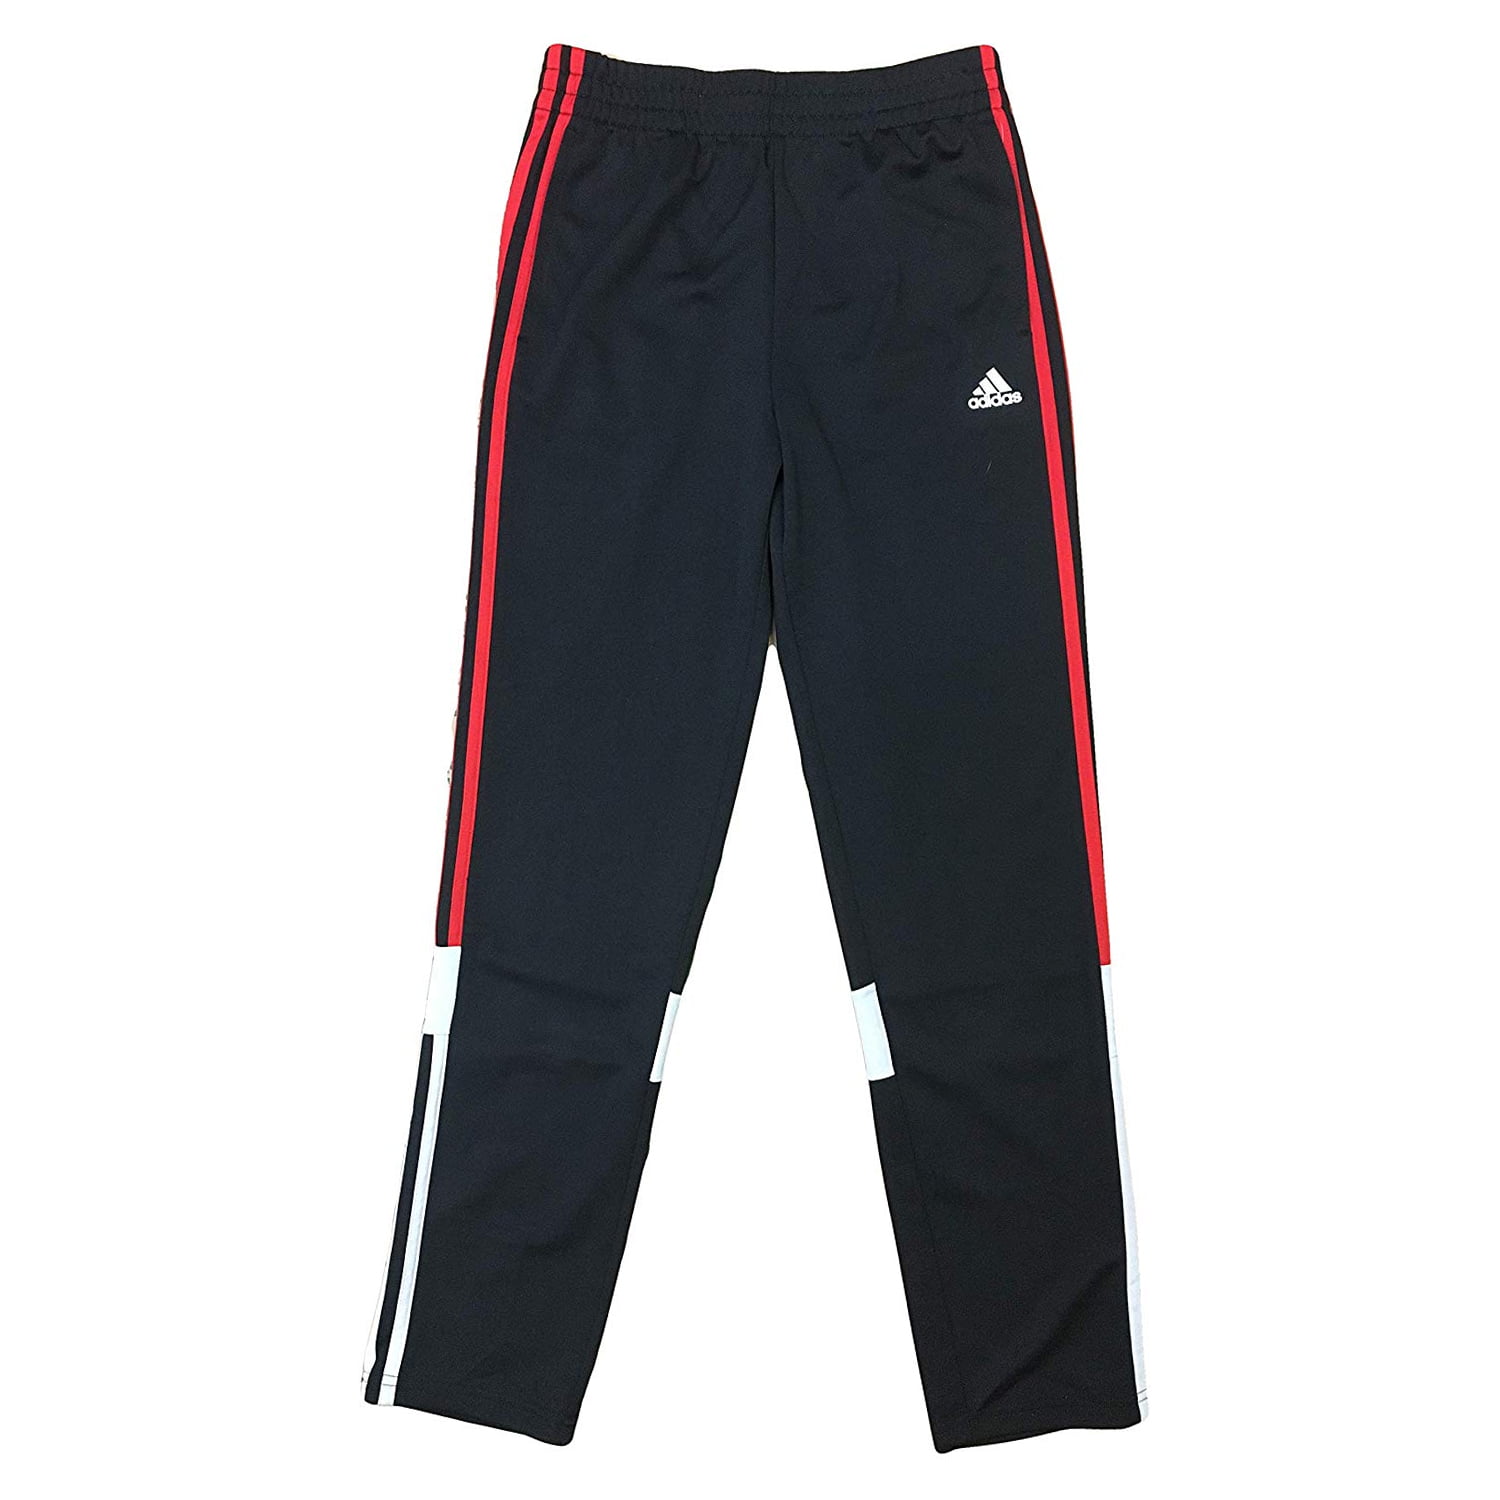 Adidas Boy's Youth 3 Stripes Performance Midfielder Warm Up Track Pants ...